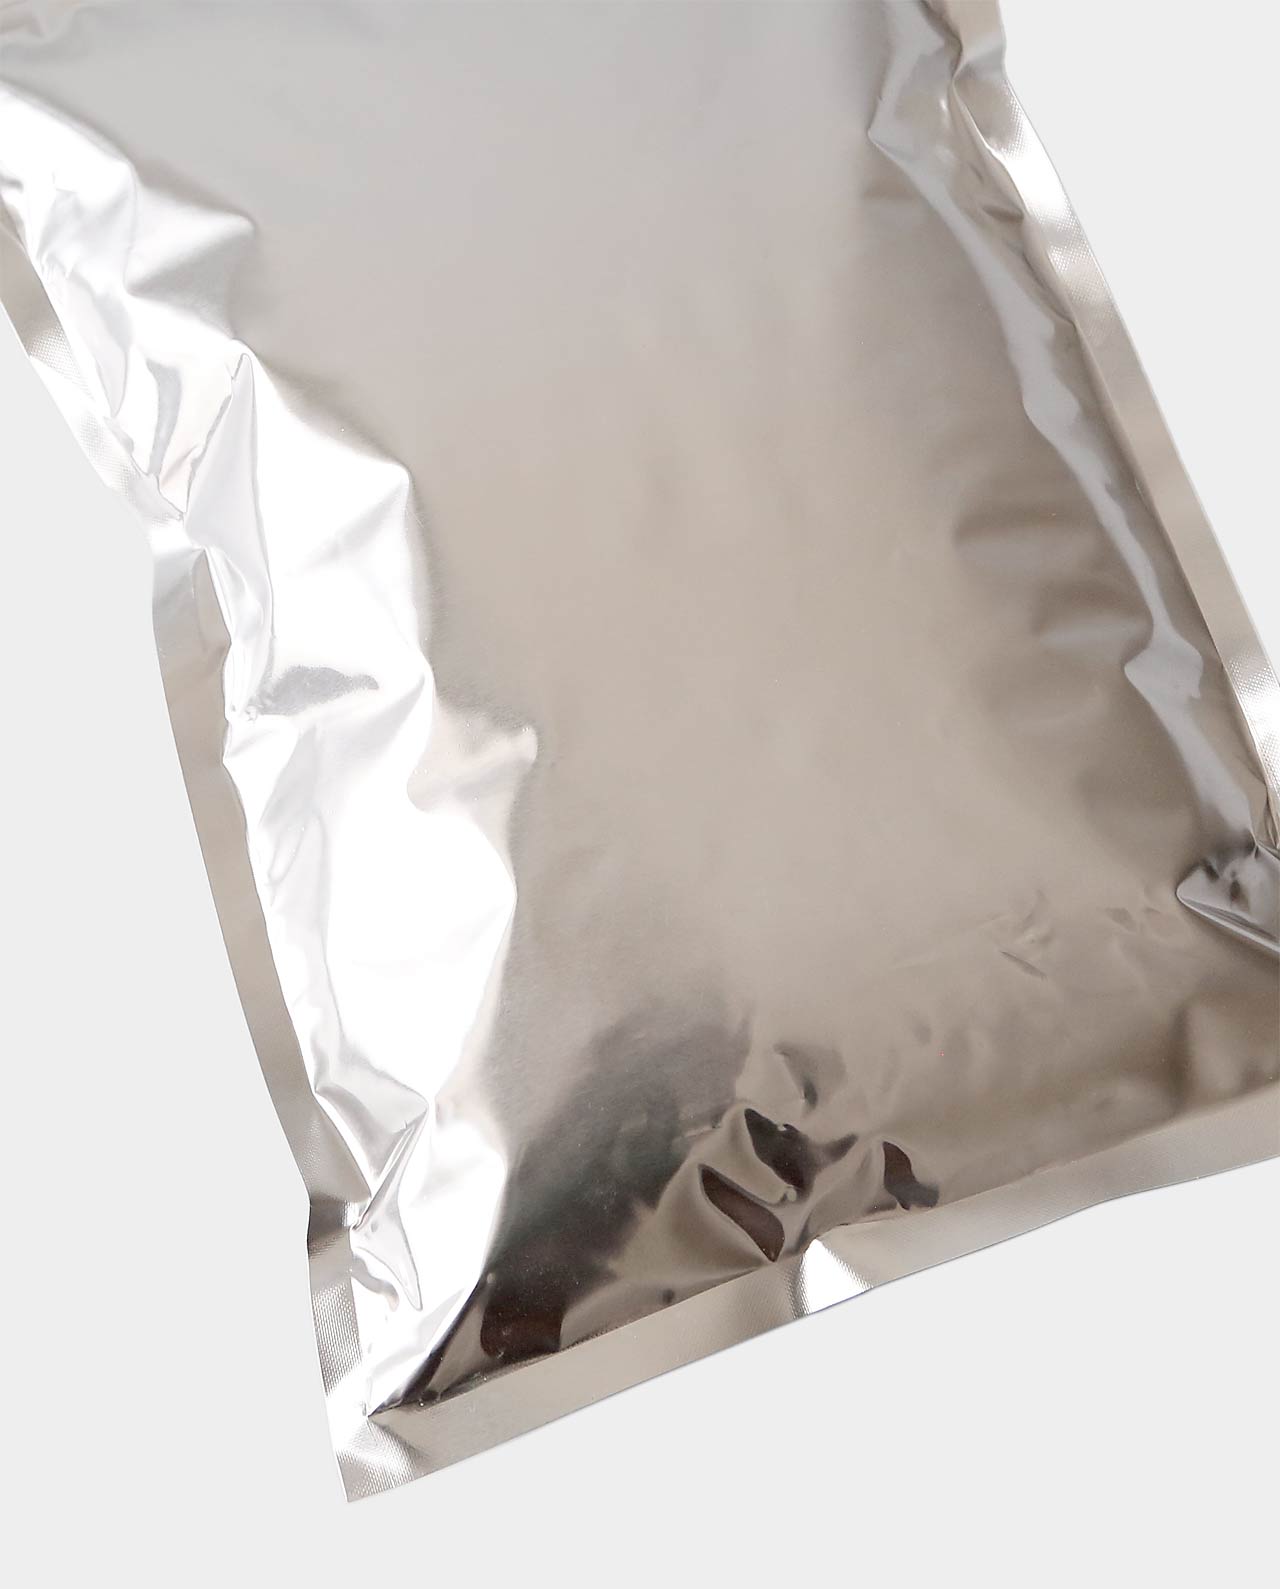 MYLAR BAGS - 10 x 16, 1-Gallon w/ Zip Lock Closure